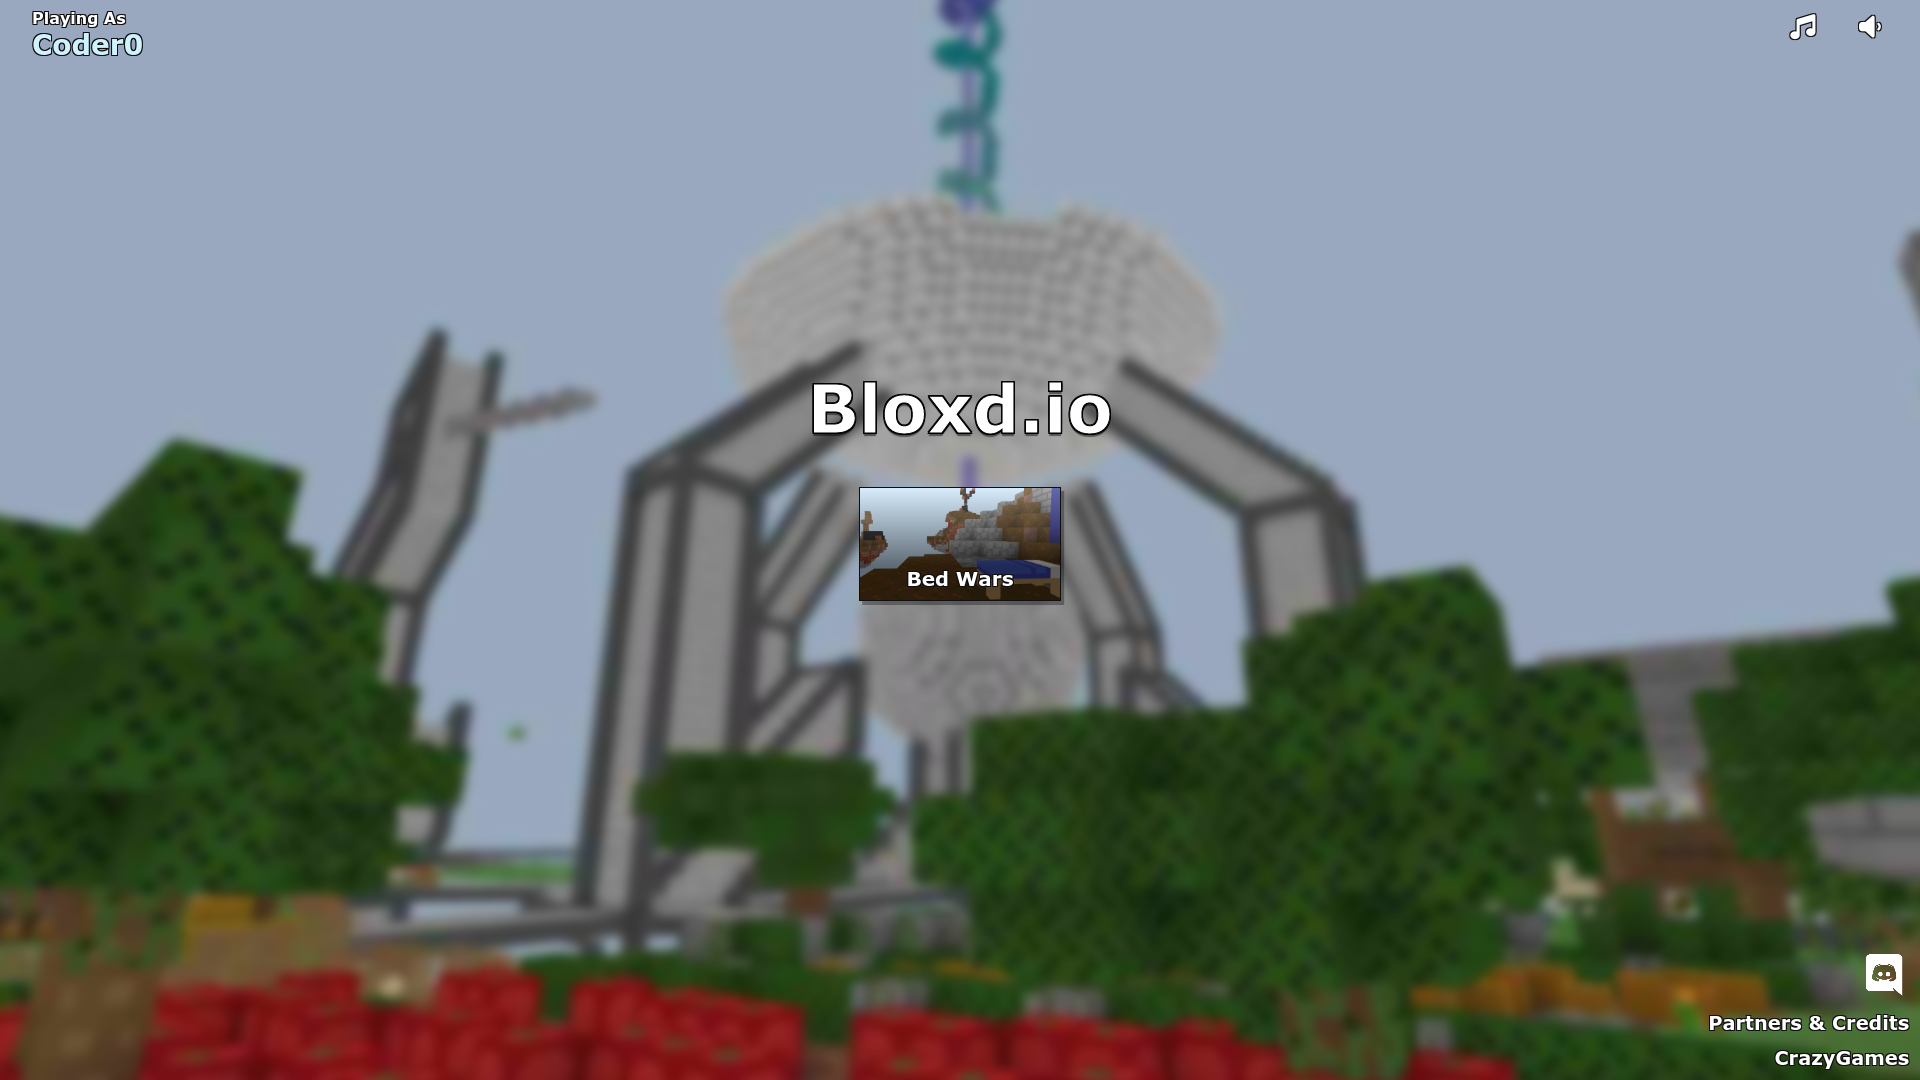 Bloxd.io 2d by Coder0